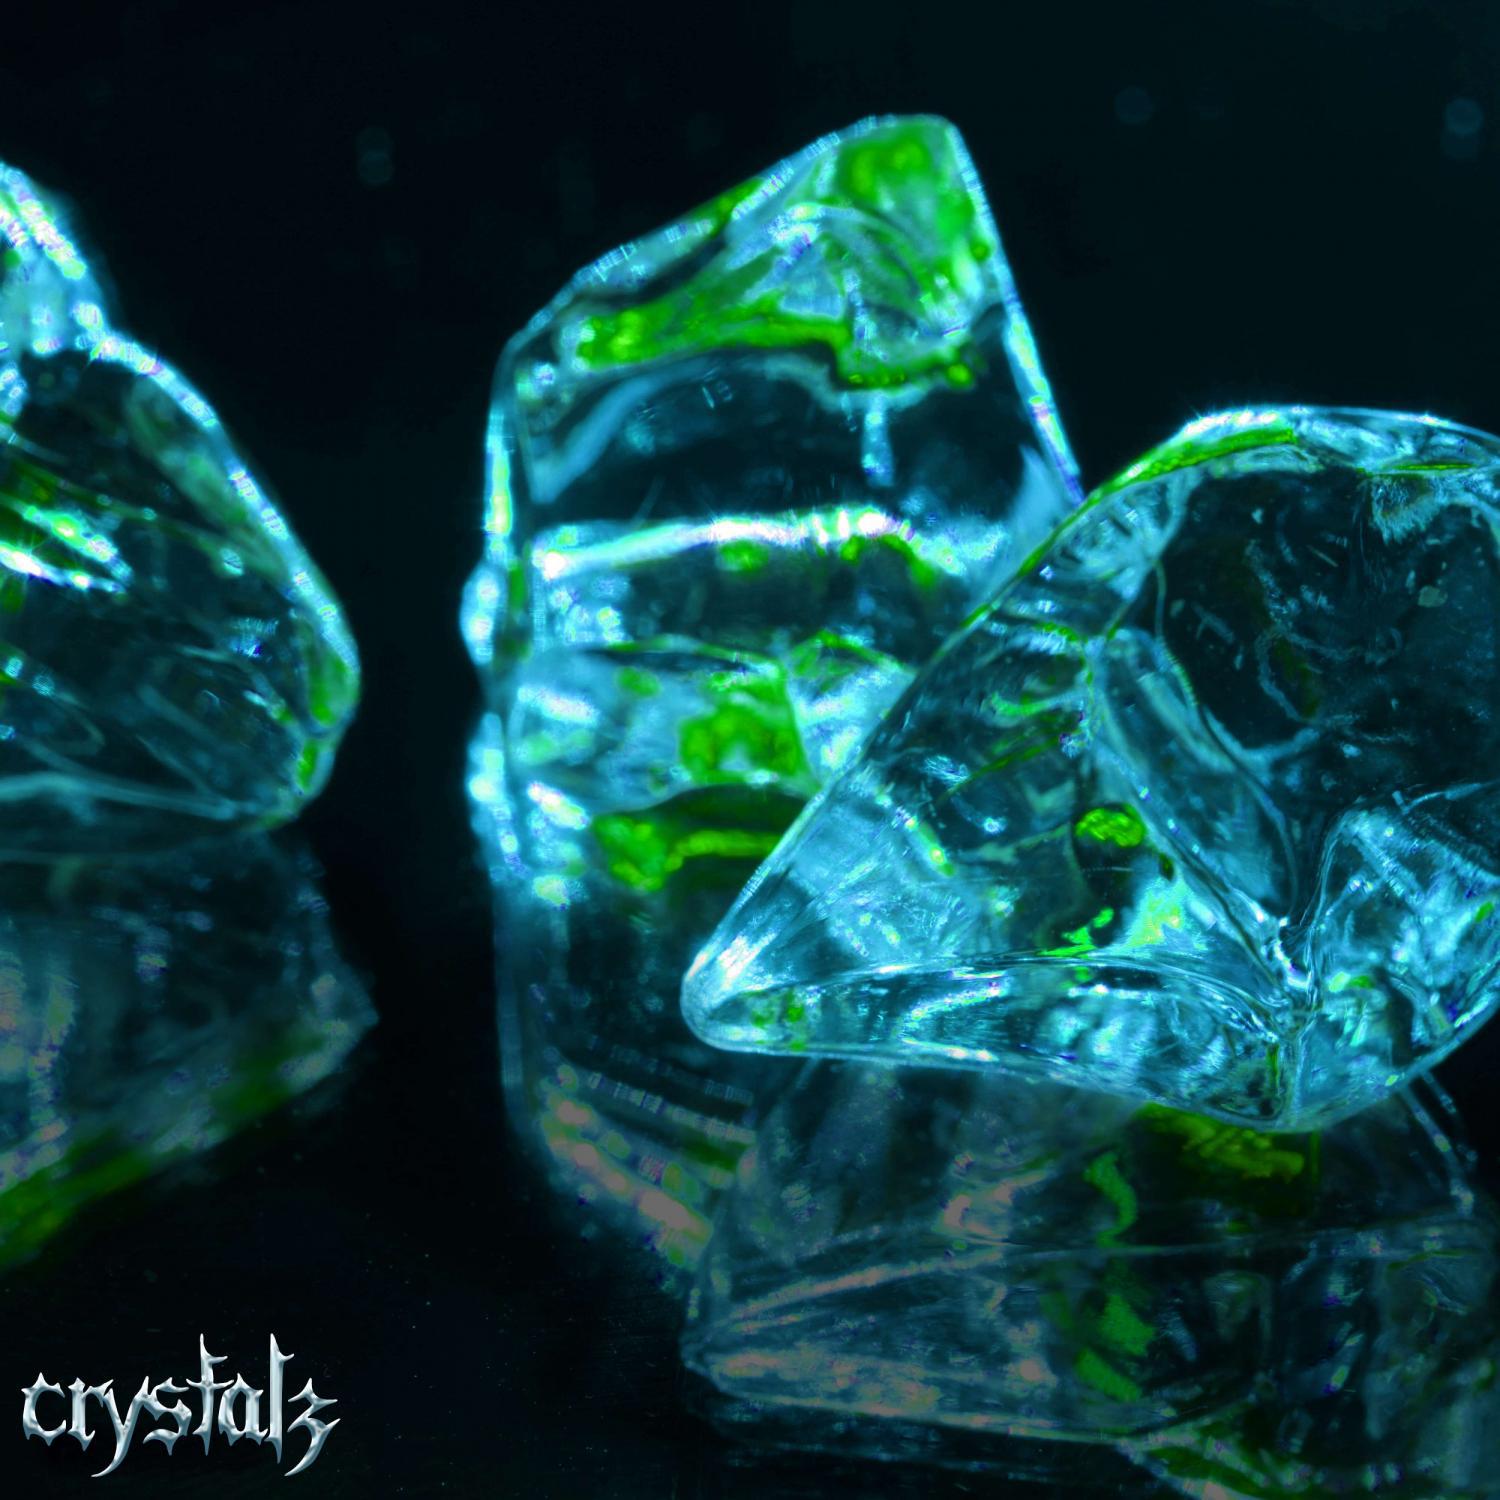 Crystals lsolate. Crystals isolate ФОНК. Crystals isolate.exe. Phonk - Crystal - isolate. Crystals pr1svx.